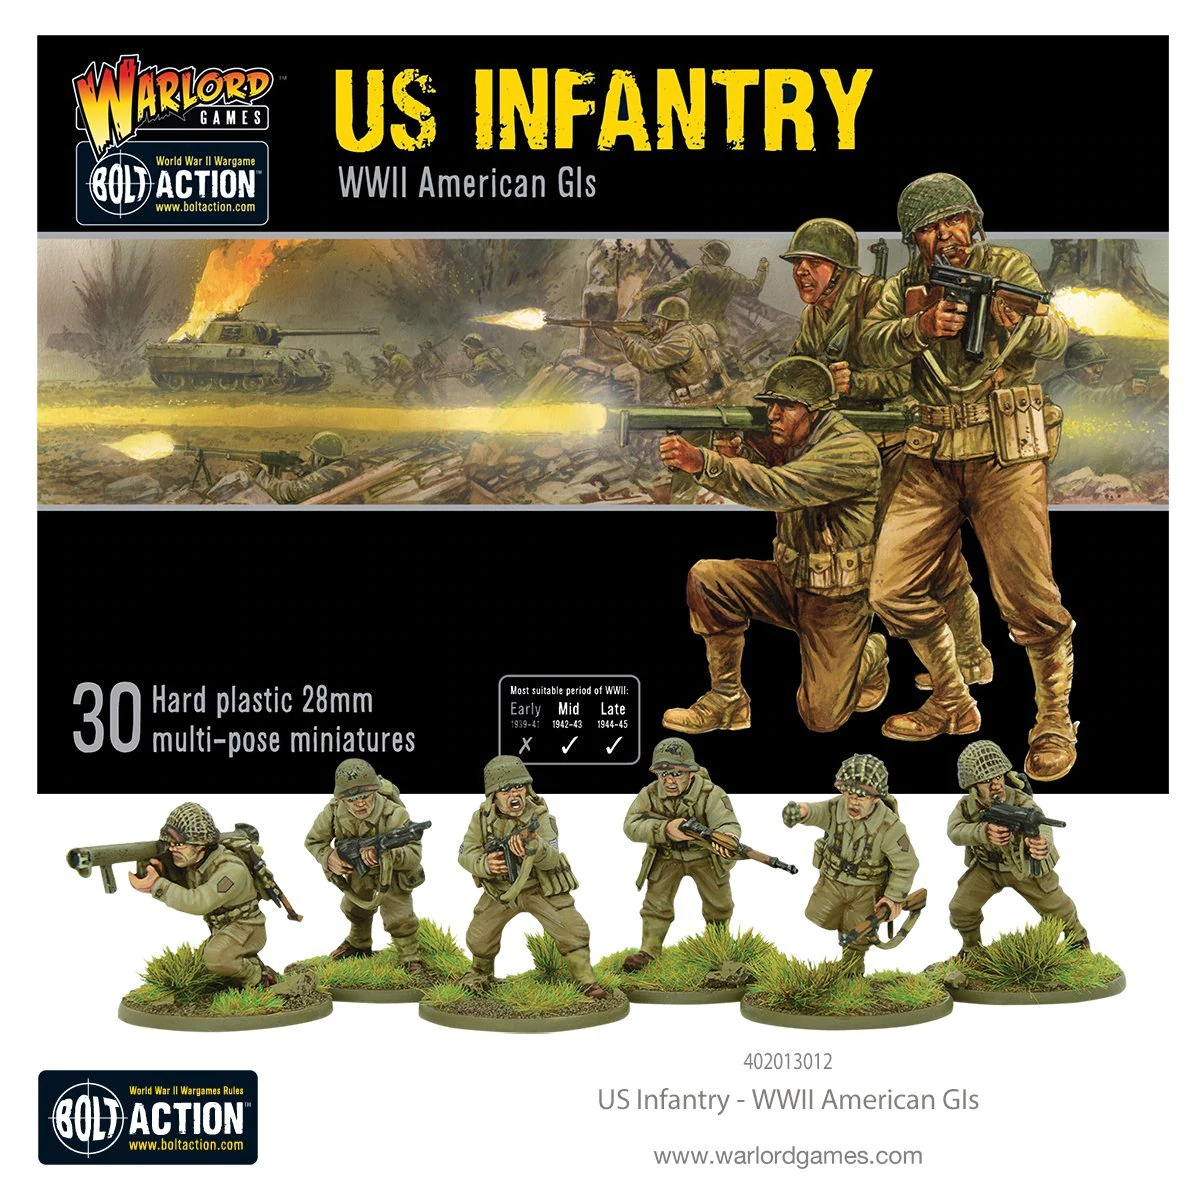 US Infantry - WW2 American GIs-1649932270.jpg